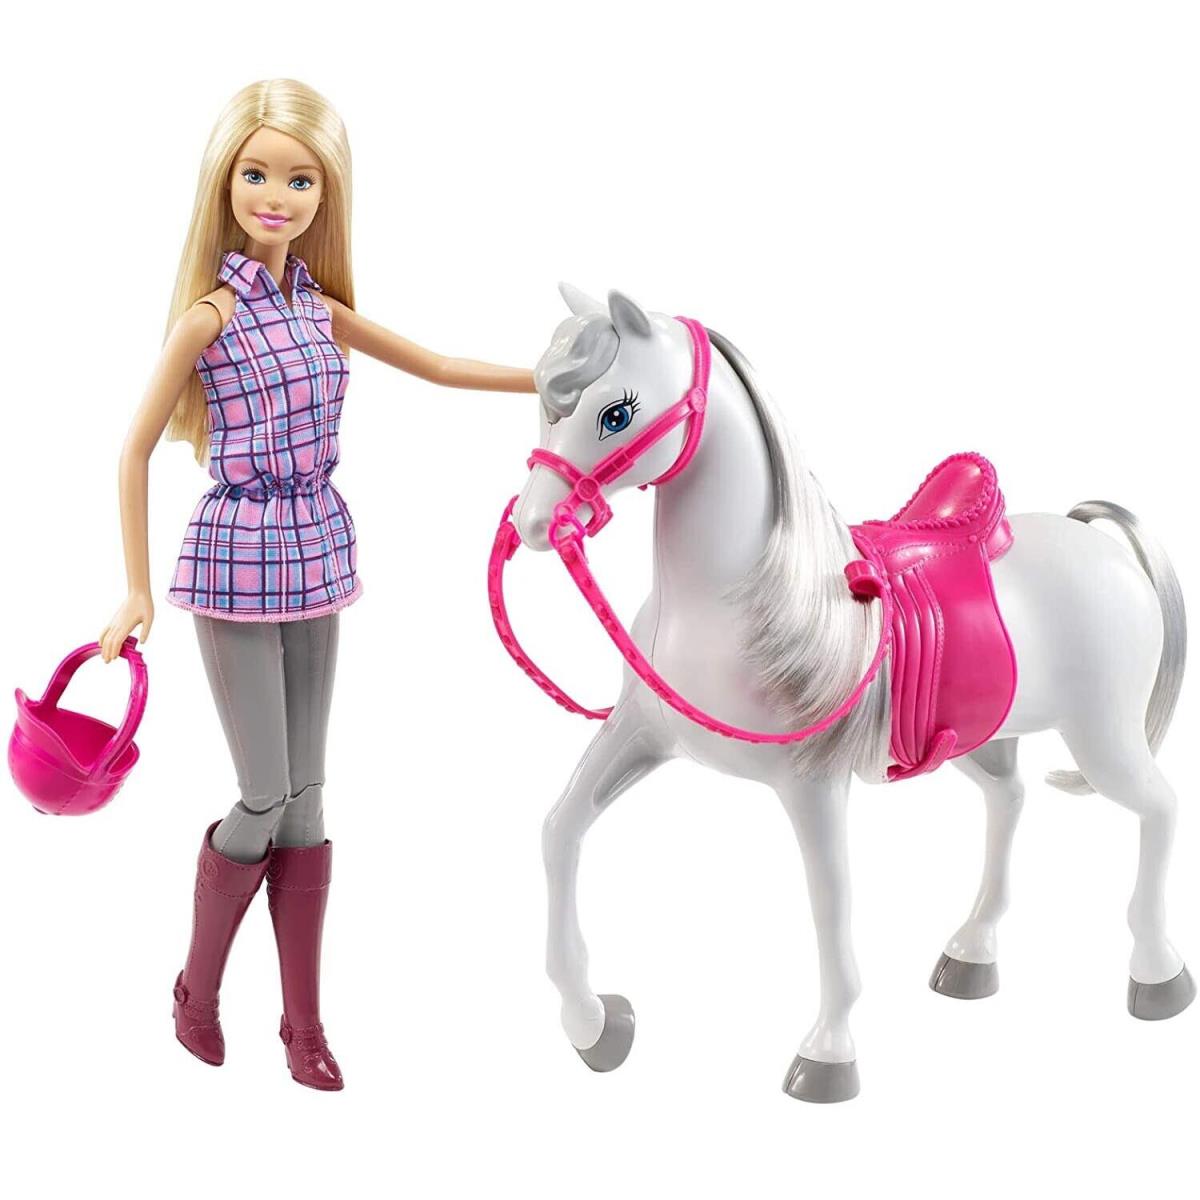 Mattel Barbie Doll and Horse - In Decro Window Box